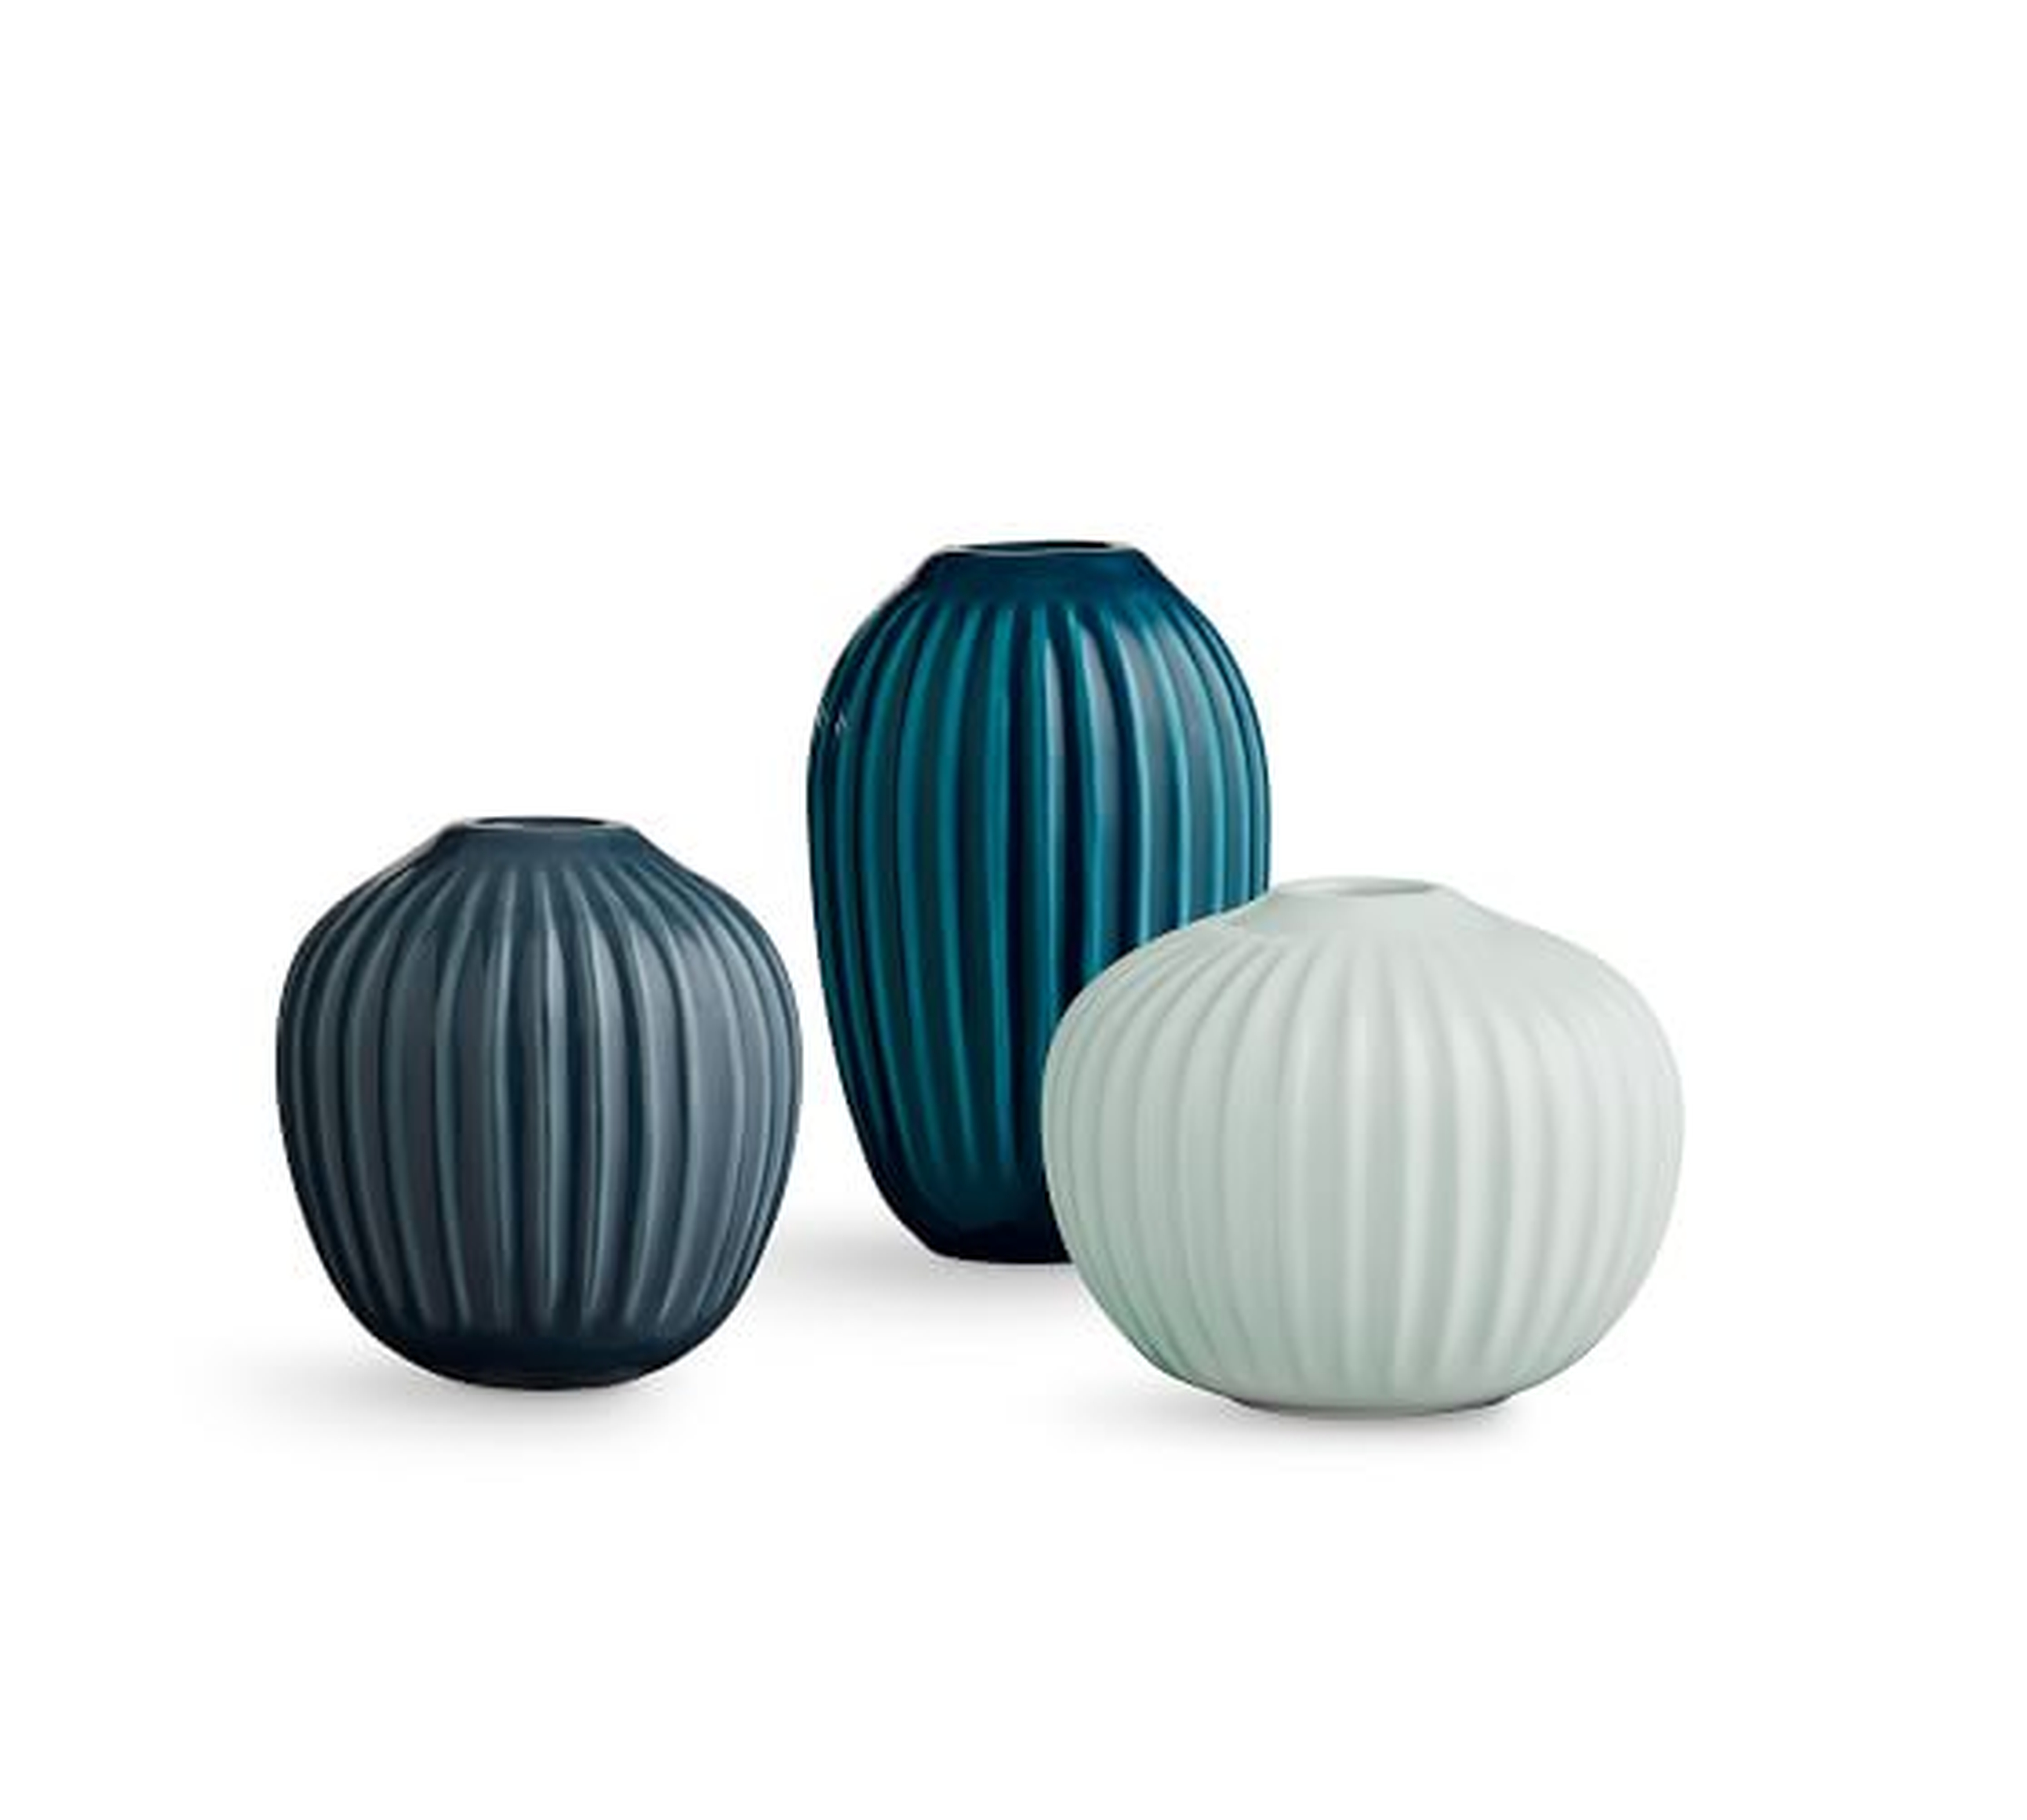 Kahler Hammershi Miniature Vases, Set of 3, Mixed Green - Pottery Barn